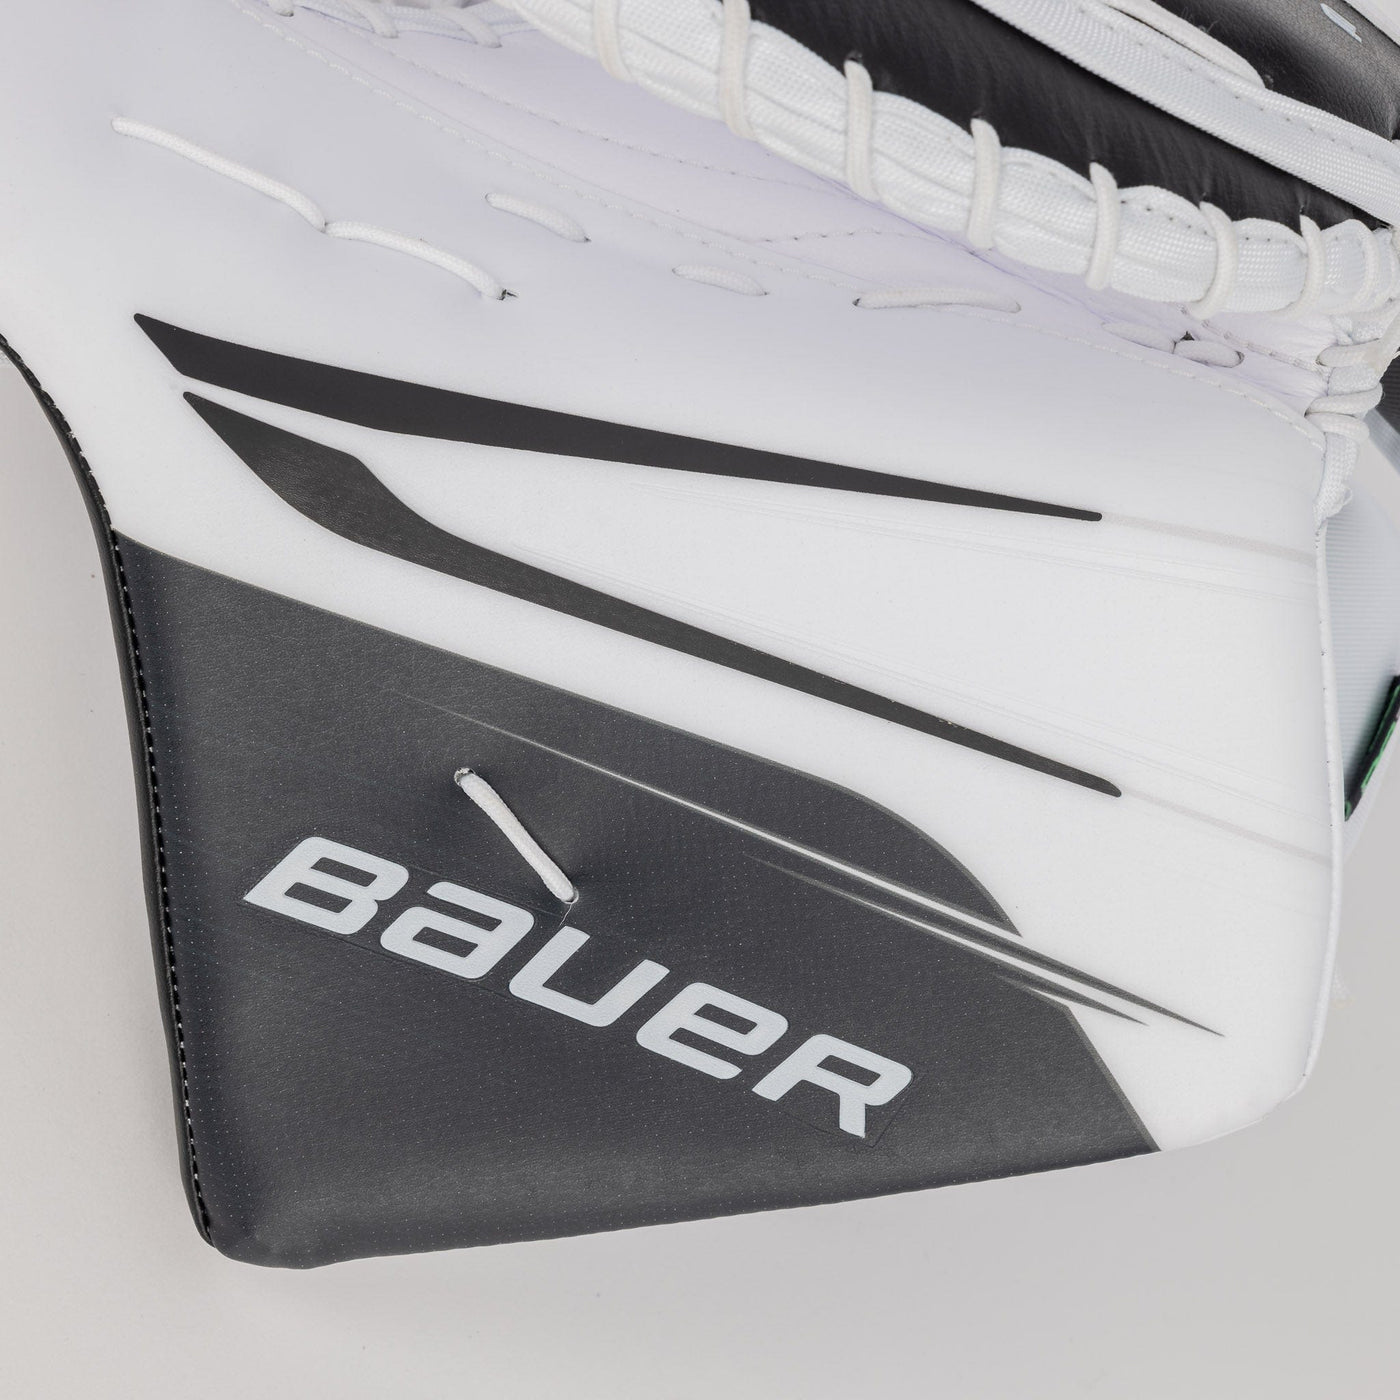 Bauer Vapor HyperLite 2 Senior Goalie Catcher - The Hockey Shop Source For Sports